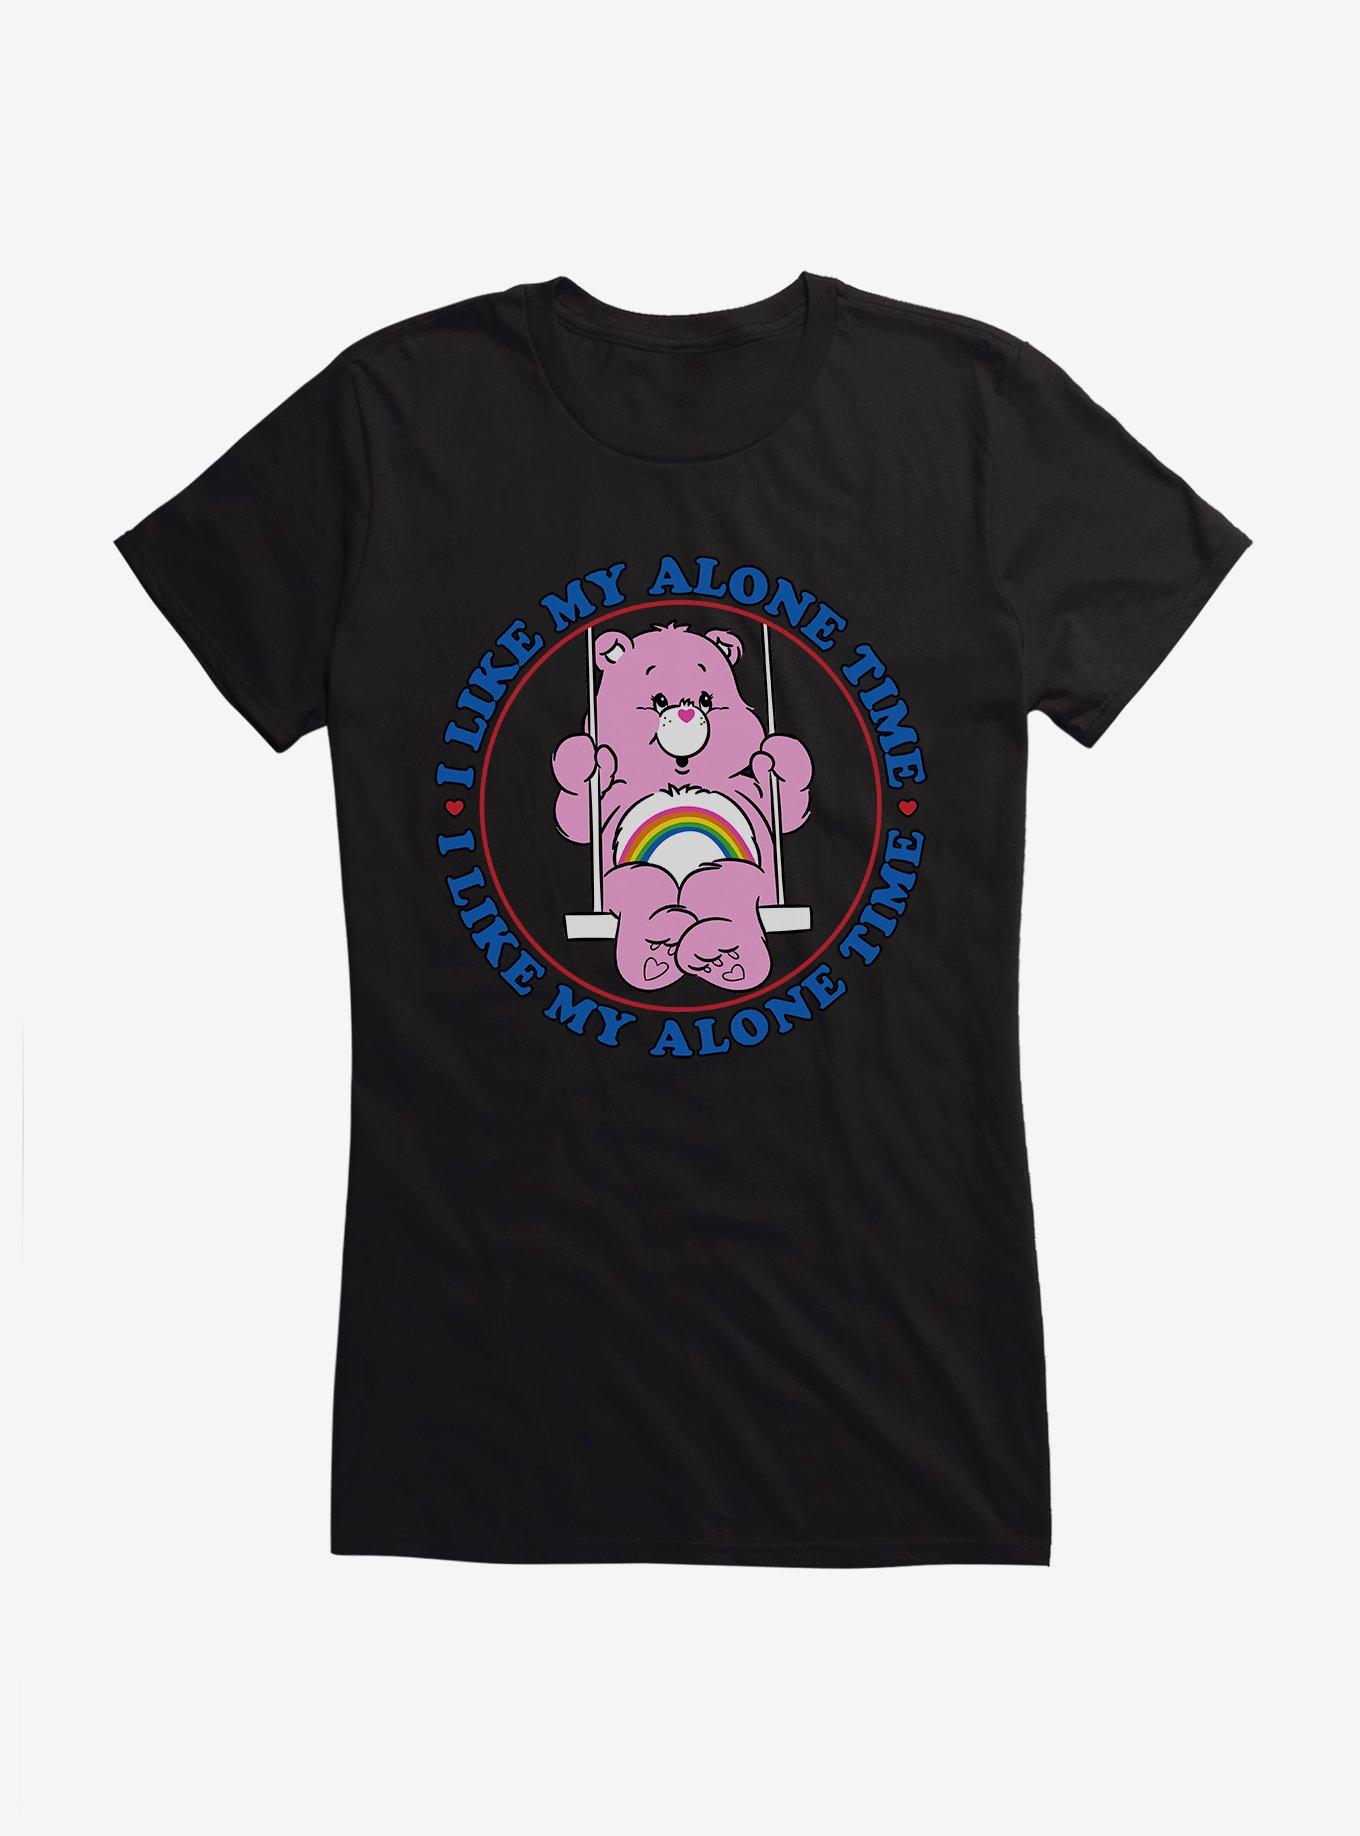 Care Bears Cheer Bear Alone Time Girls T-Shirt